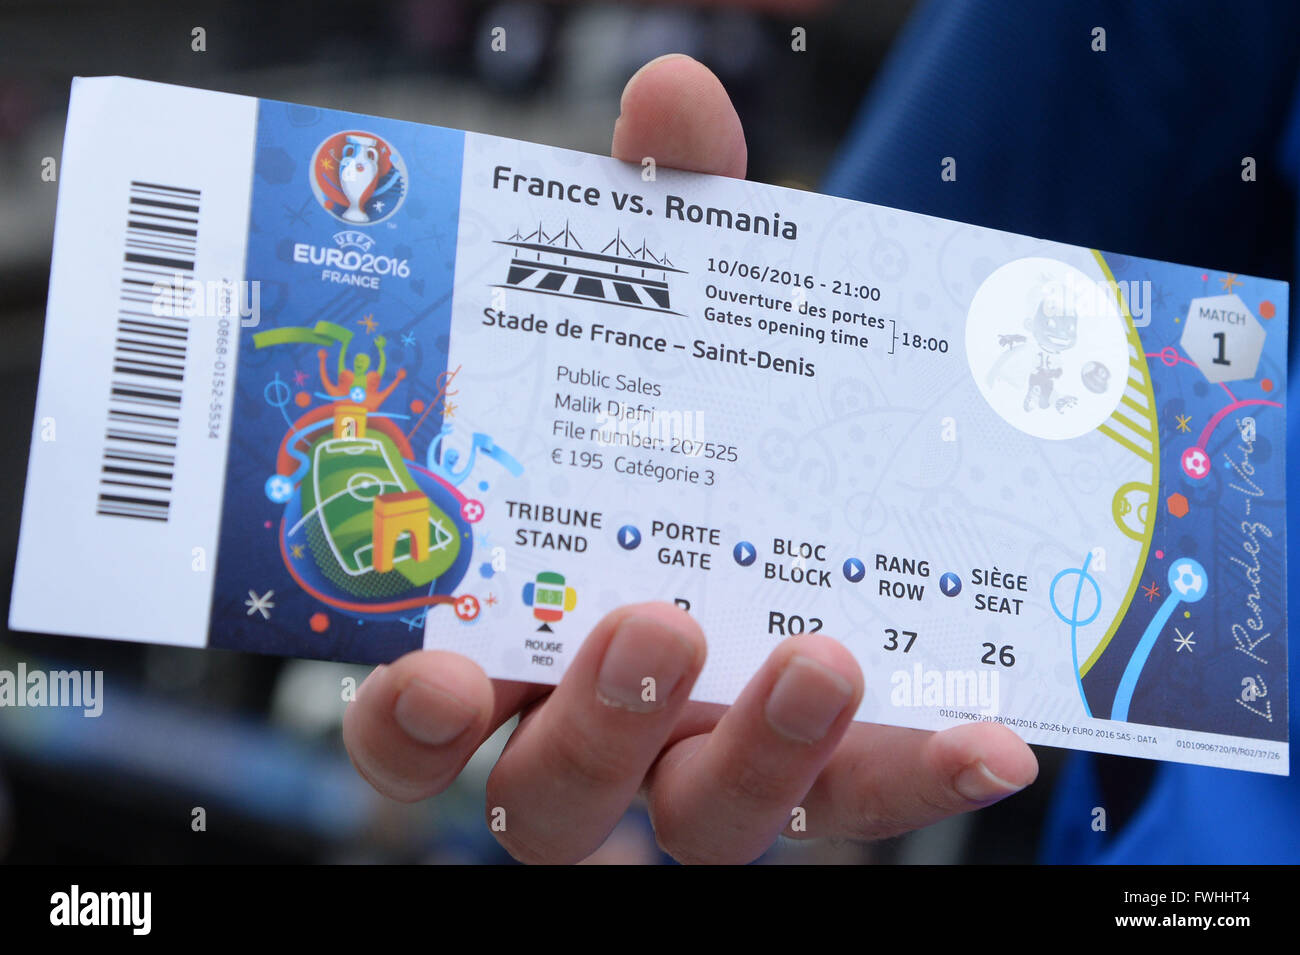 Hot tickets. UEFA tickets. Stade France tickets.